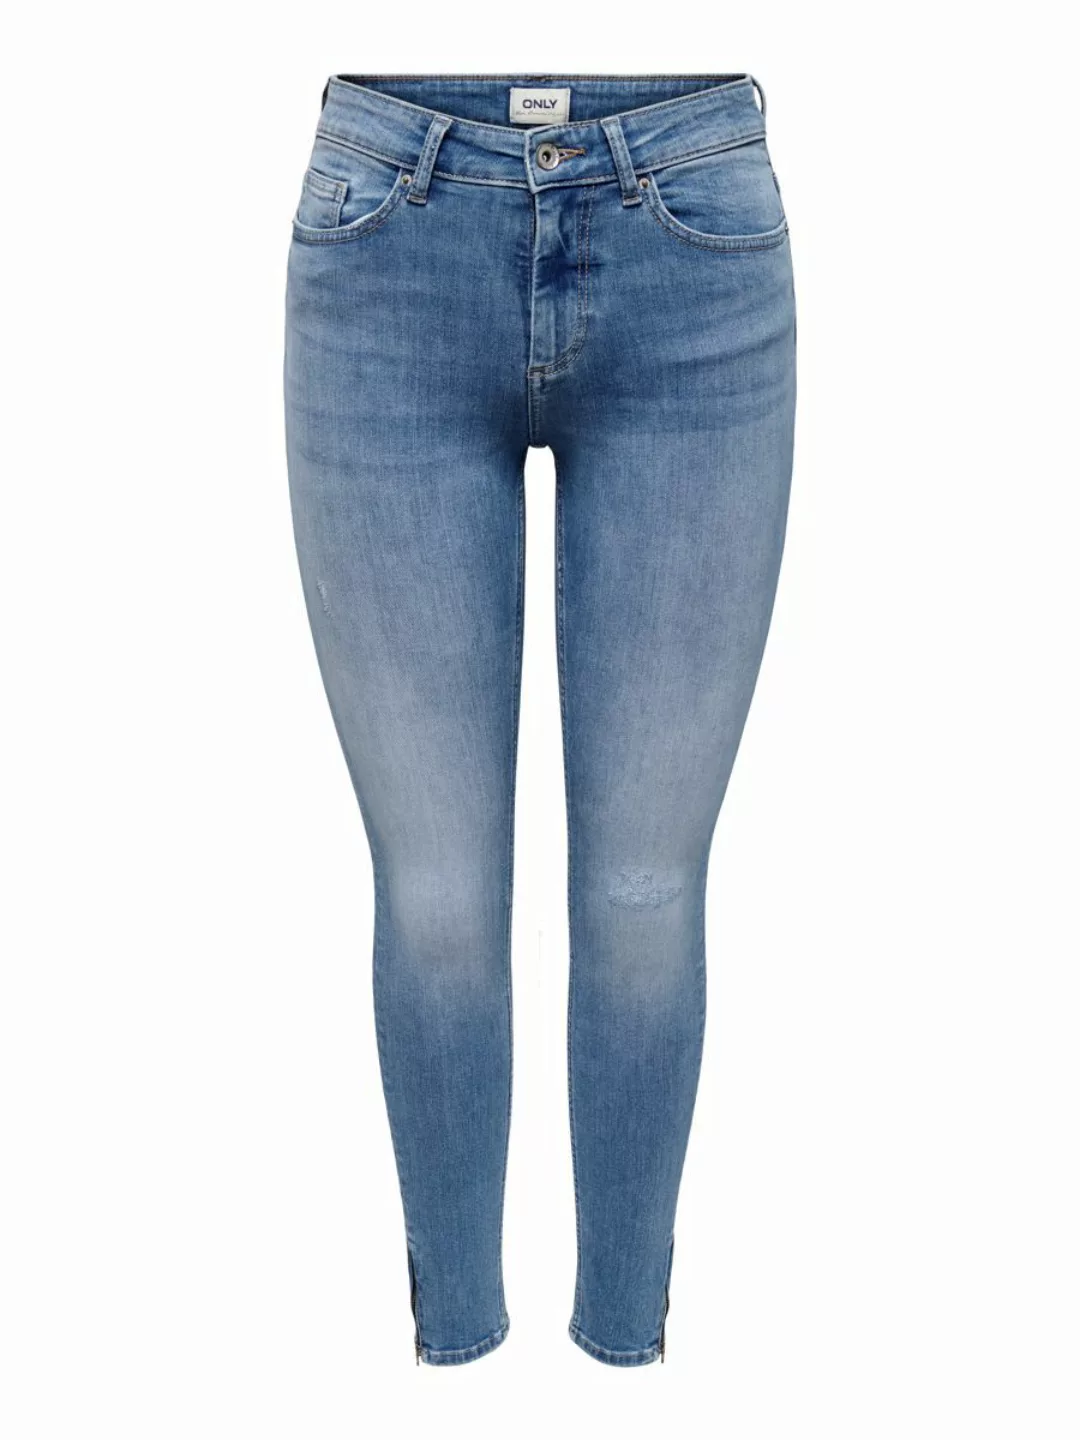 Only Damen Jeans ONLBLUSH MID SK TAI848 - Skinny Fit - Blau - Light Medium günstig online kaufen